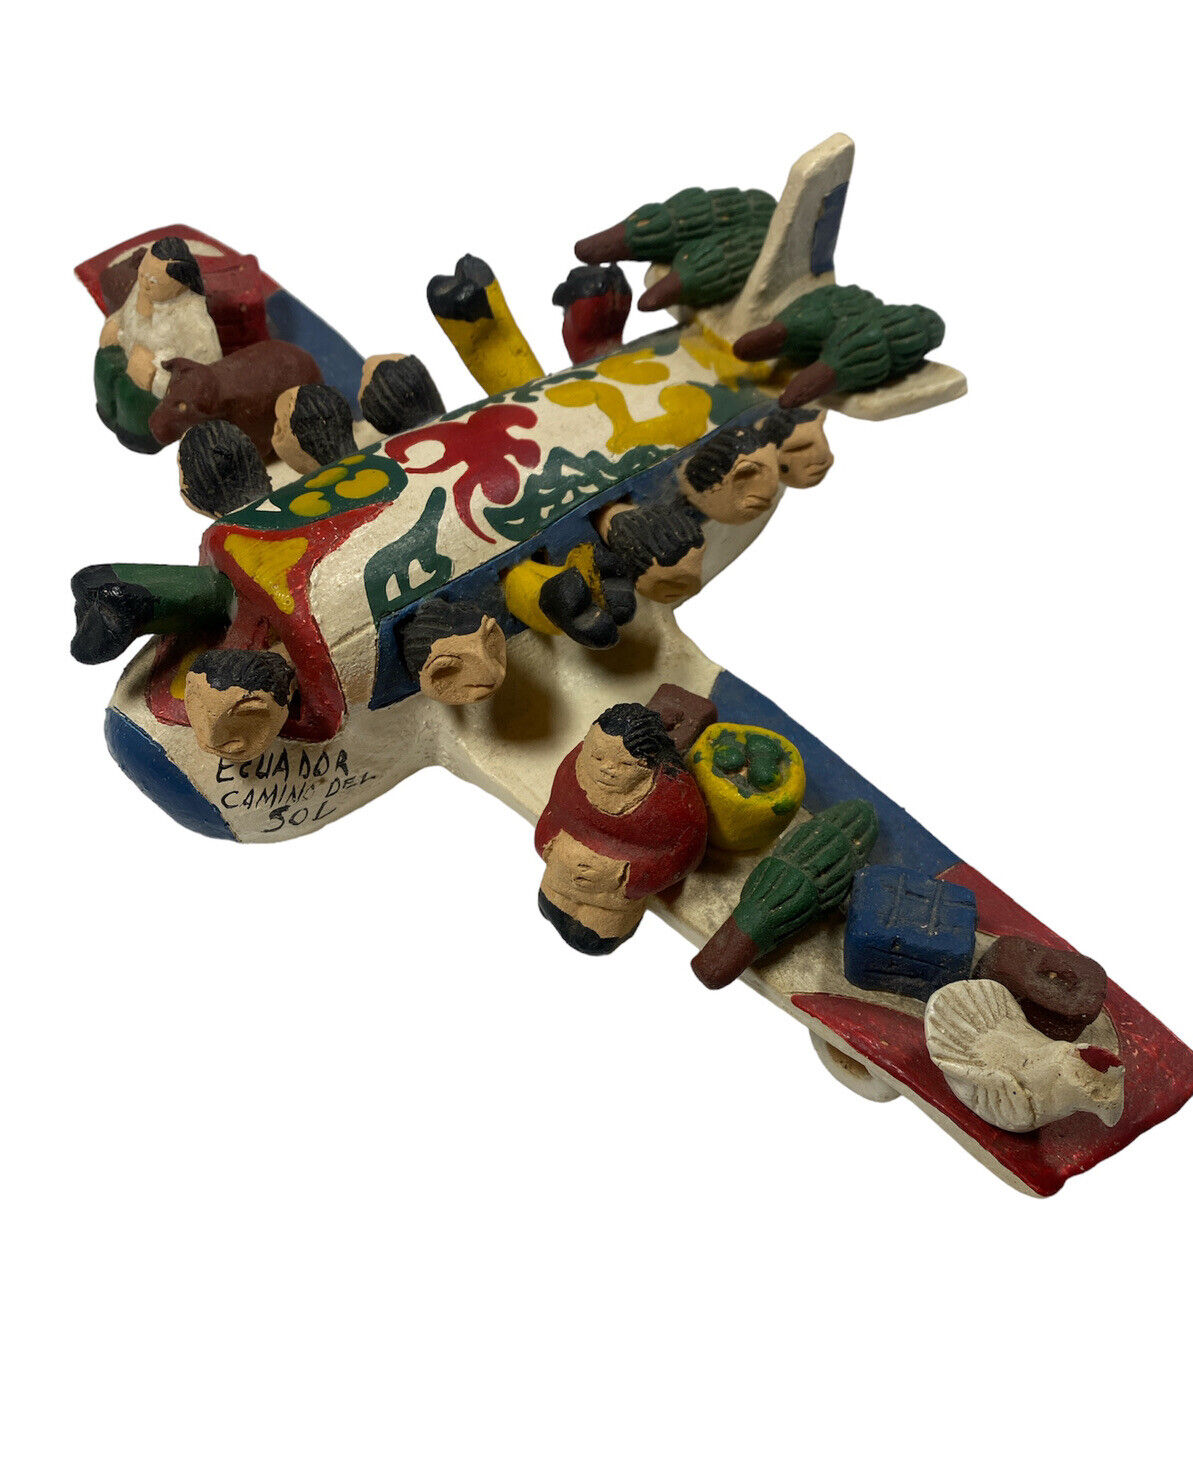 Vintage South American Folk Art Clay Airplane Ecuador Passengers Produce Animals